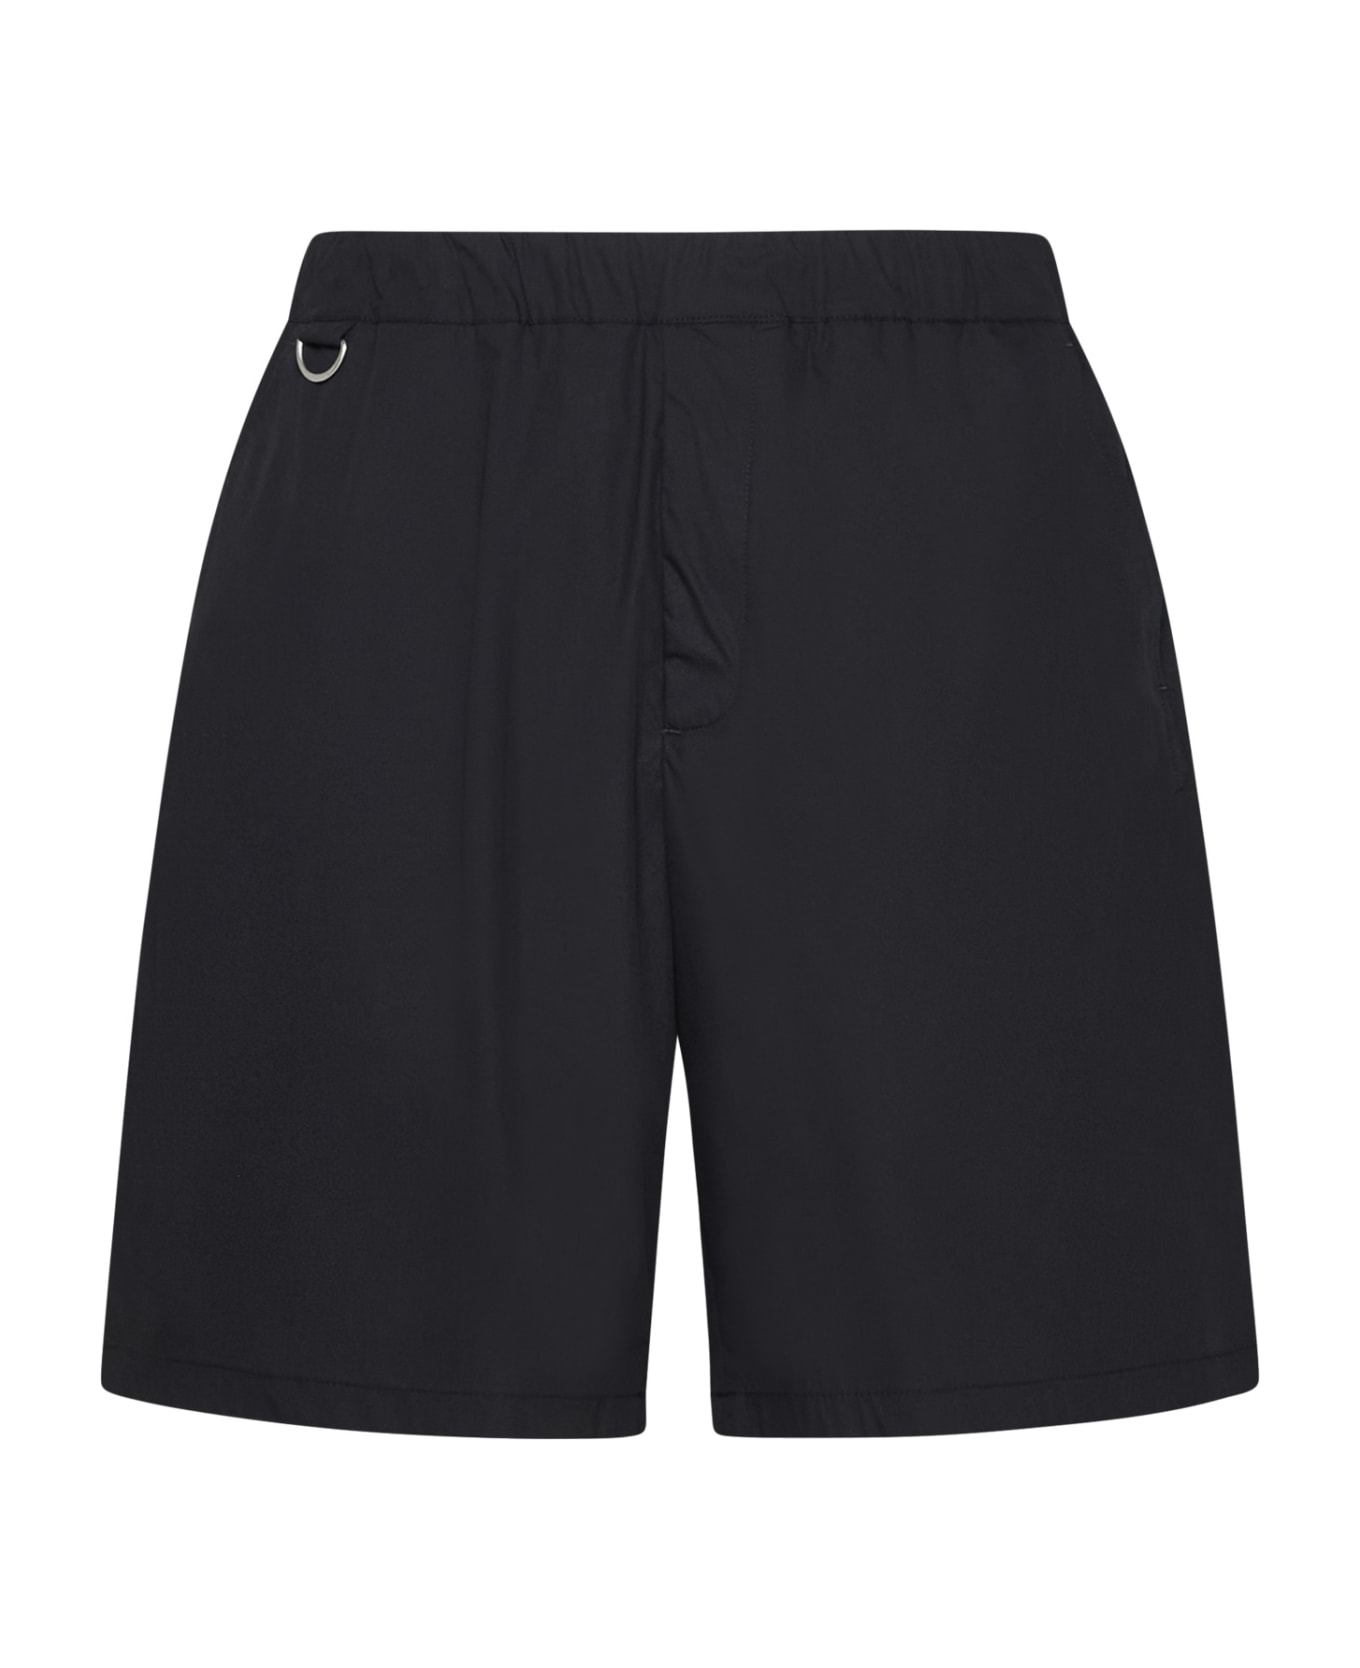 Low Brand Shorts - Jet black